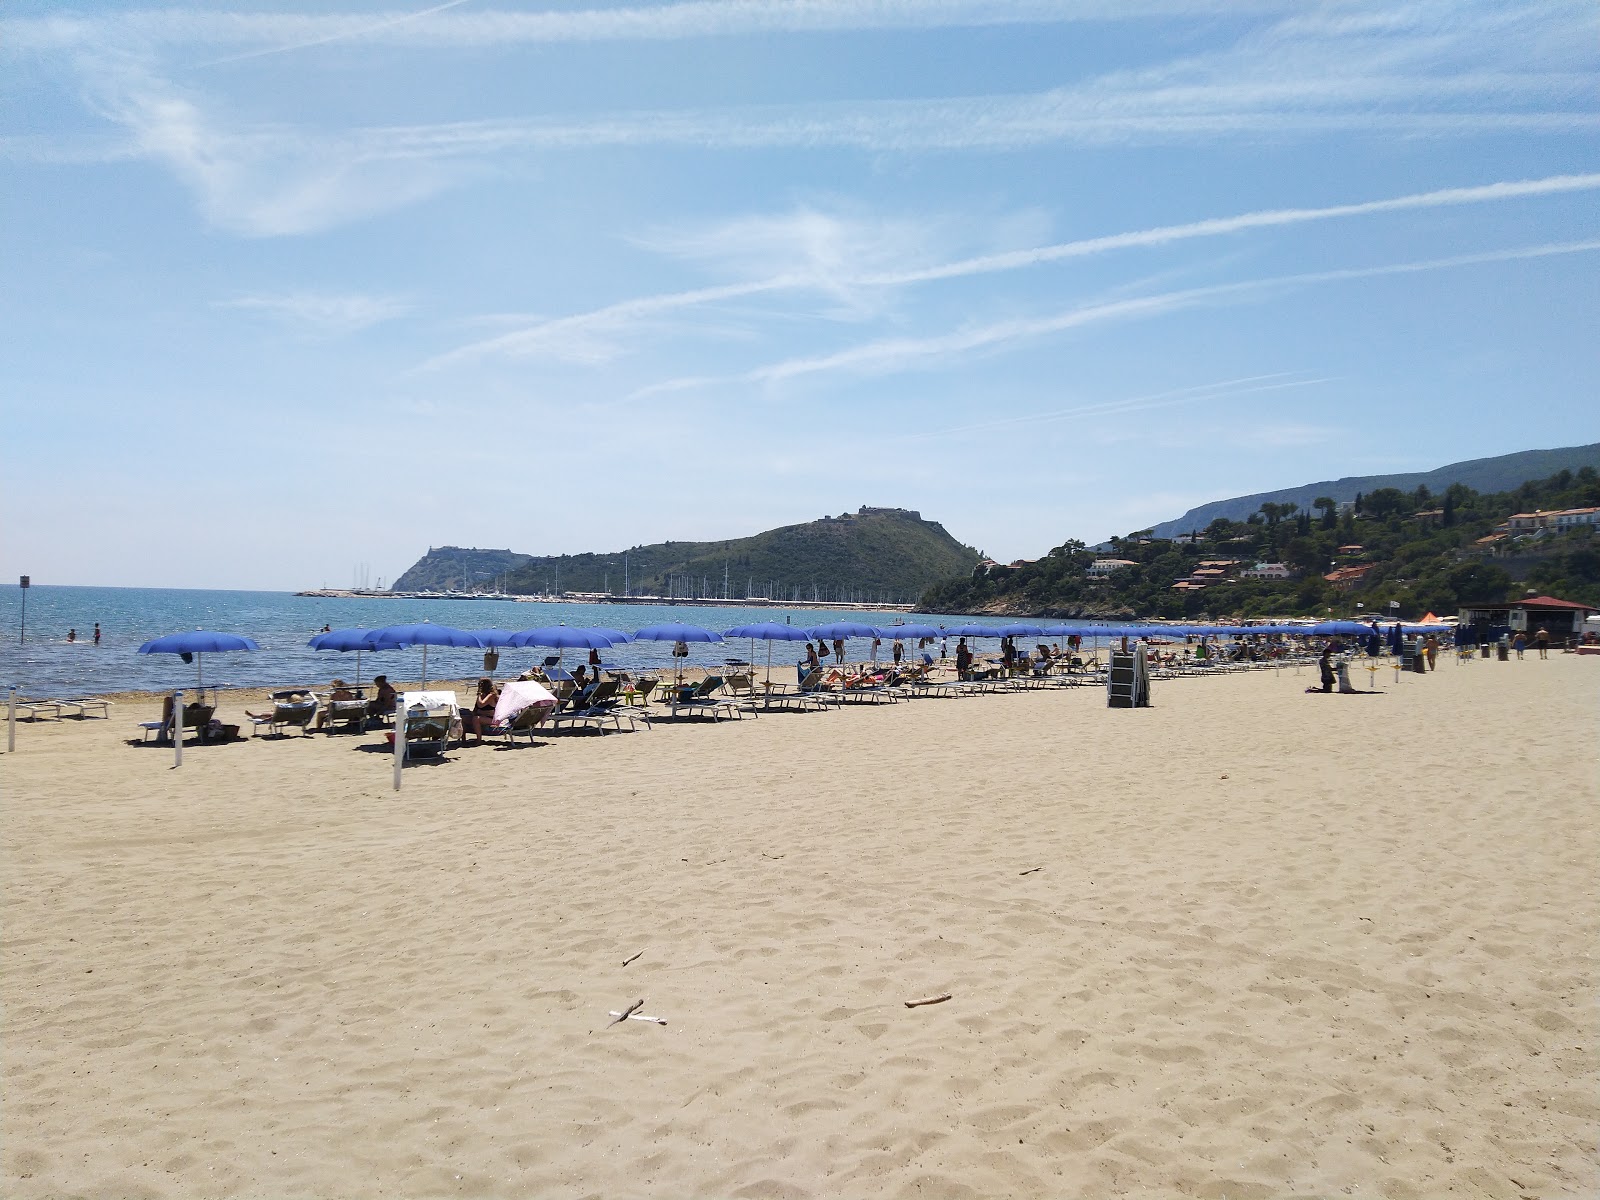 Foto de Spiaggia della Feniglia con muy limpio nivel de limpieza